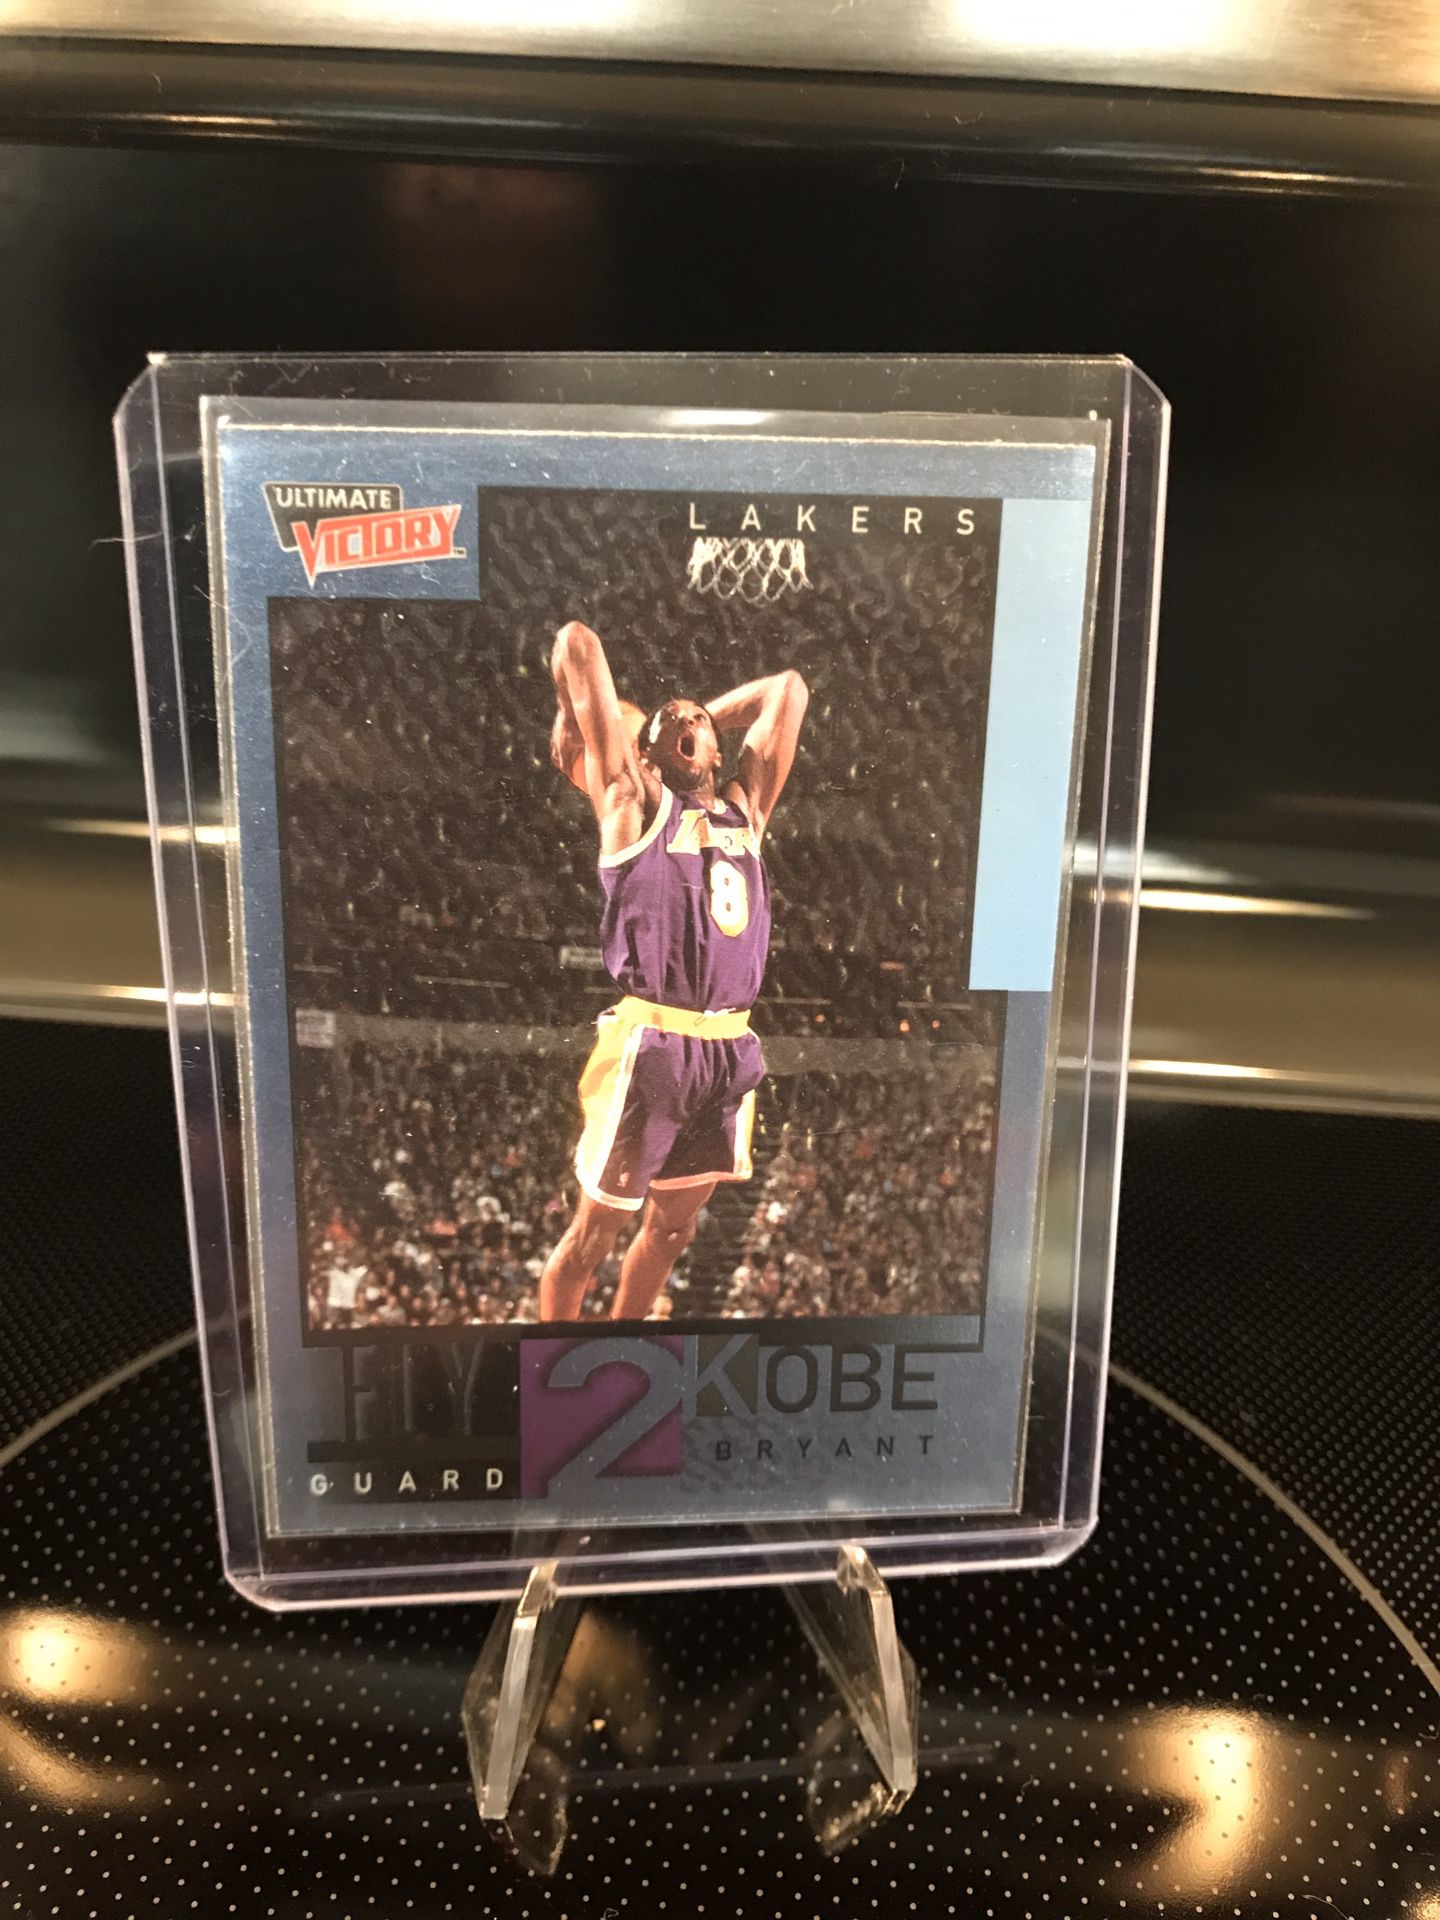 Upper Deck Kobe Bryant Basketball Card - Lakers Jersey 8 Black Mamba NBA Collectible - PSA Beckett 9 or 10 GEM MINT? - $23 OBO